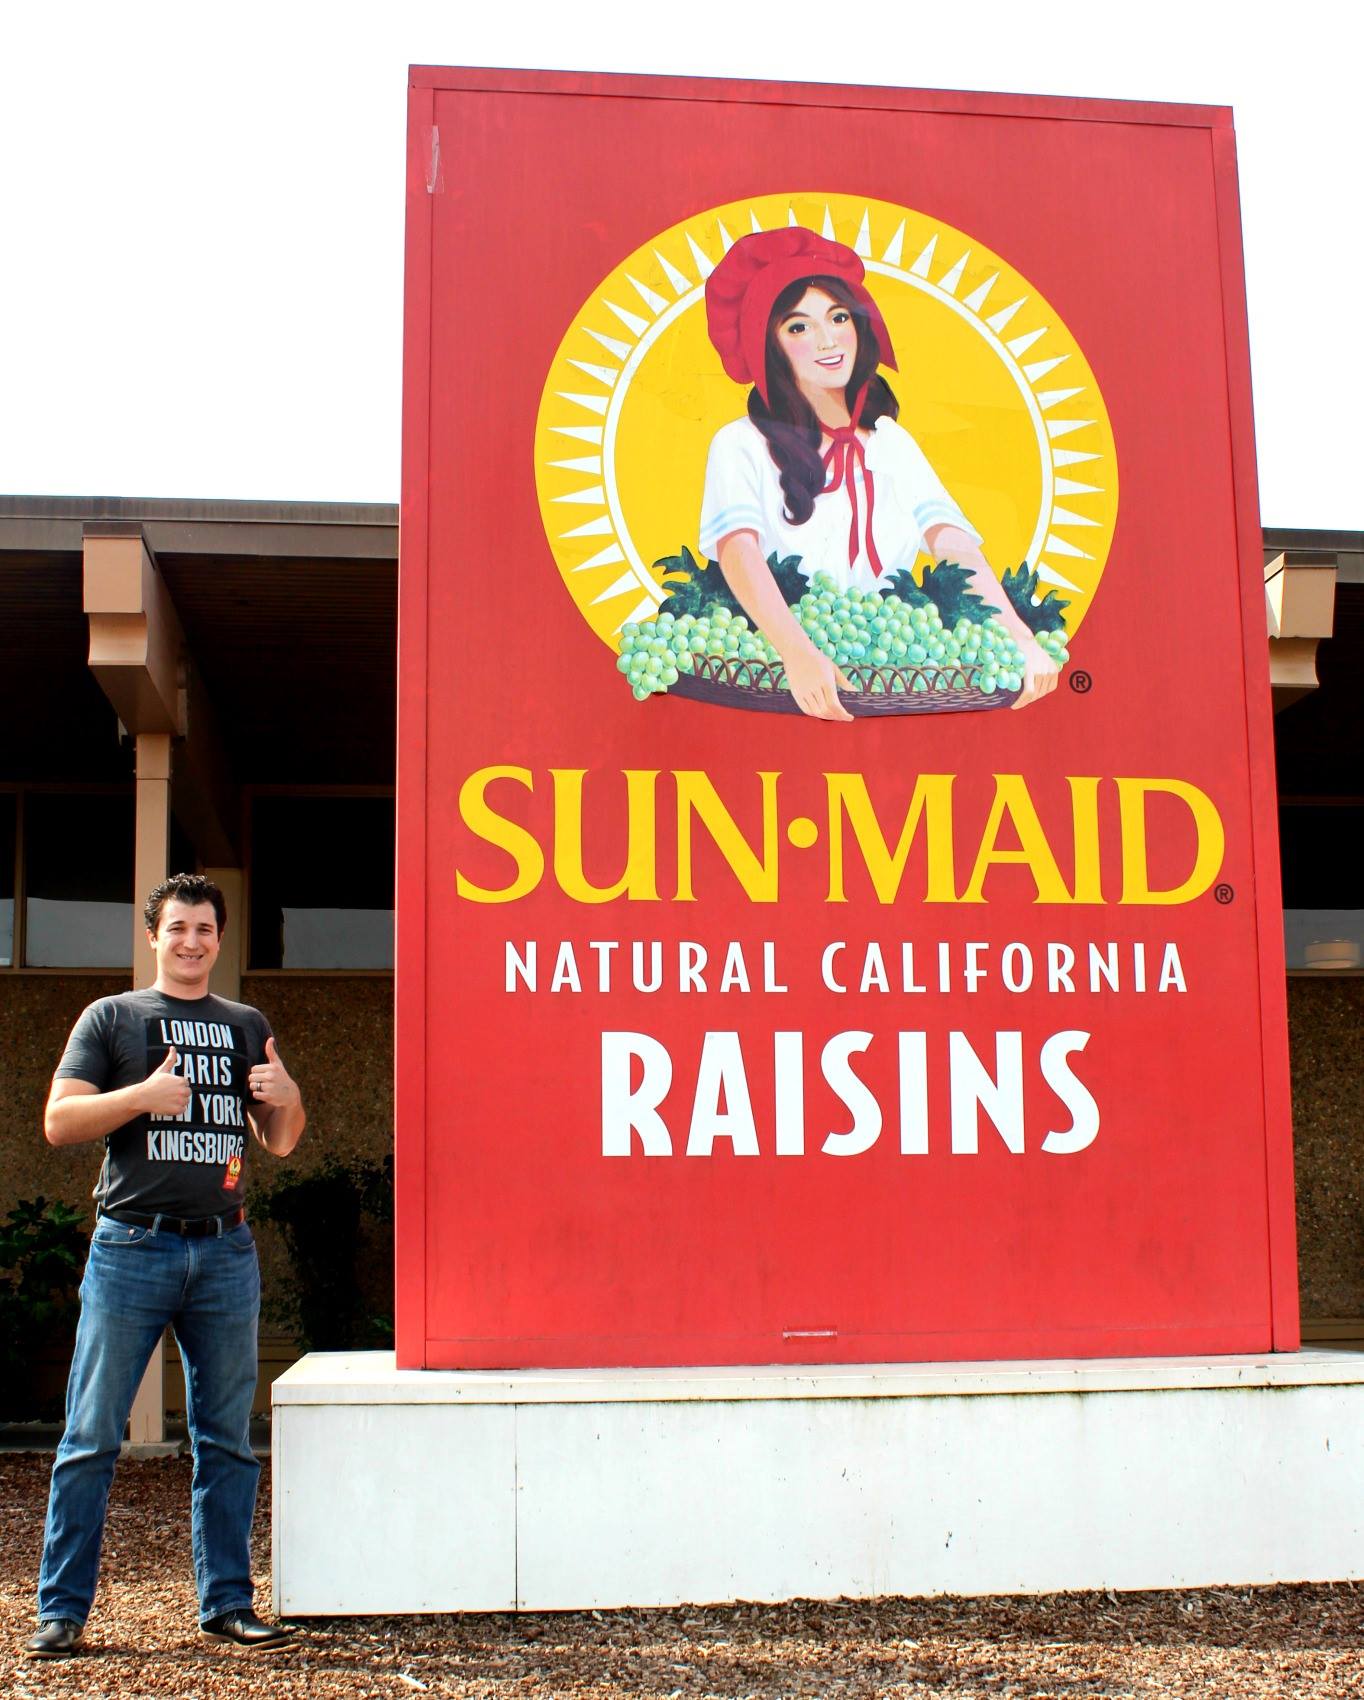 World's Largest Box of Raisins: world record set in Kingsburg, California